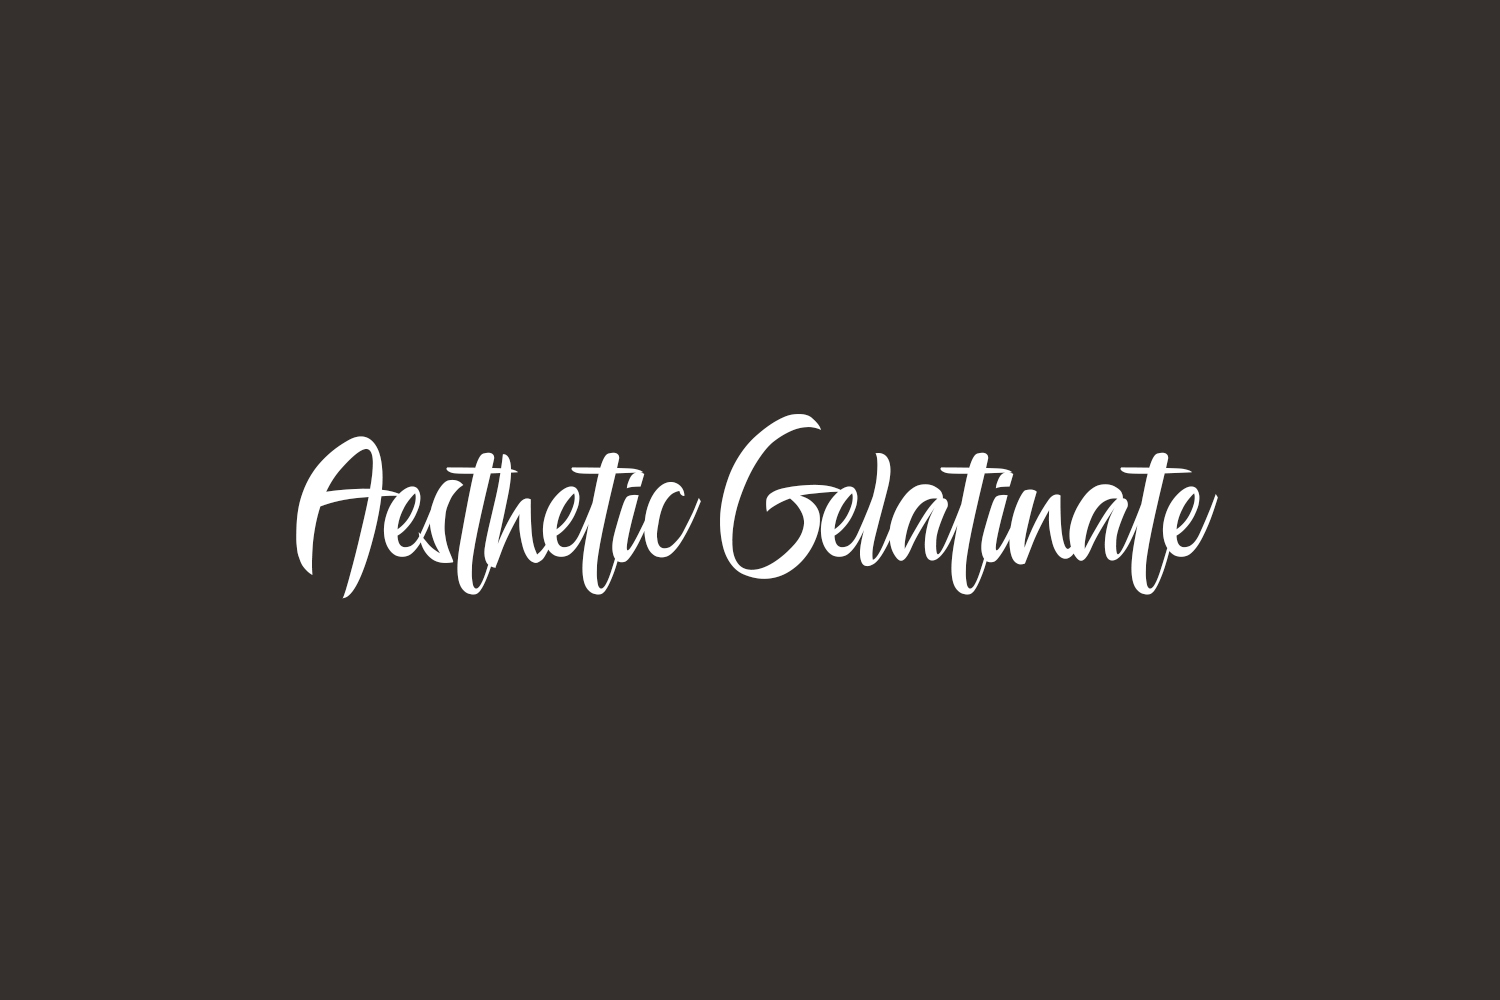 Aesthetic Gelatinate Free Font